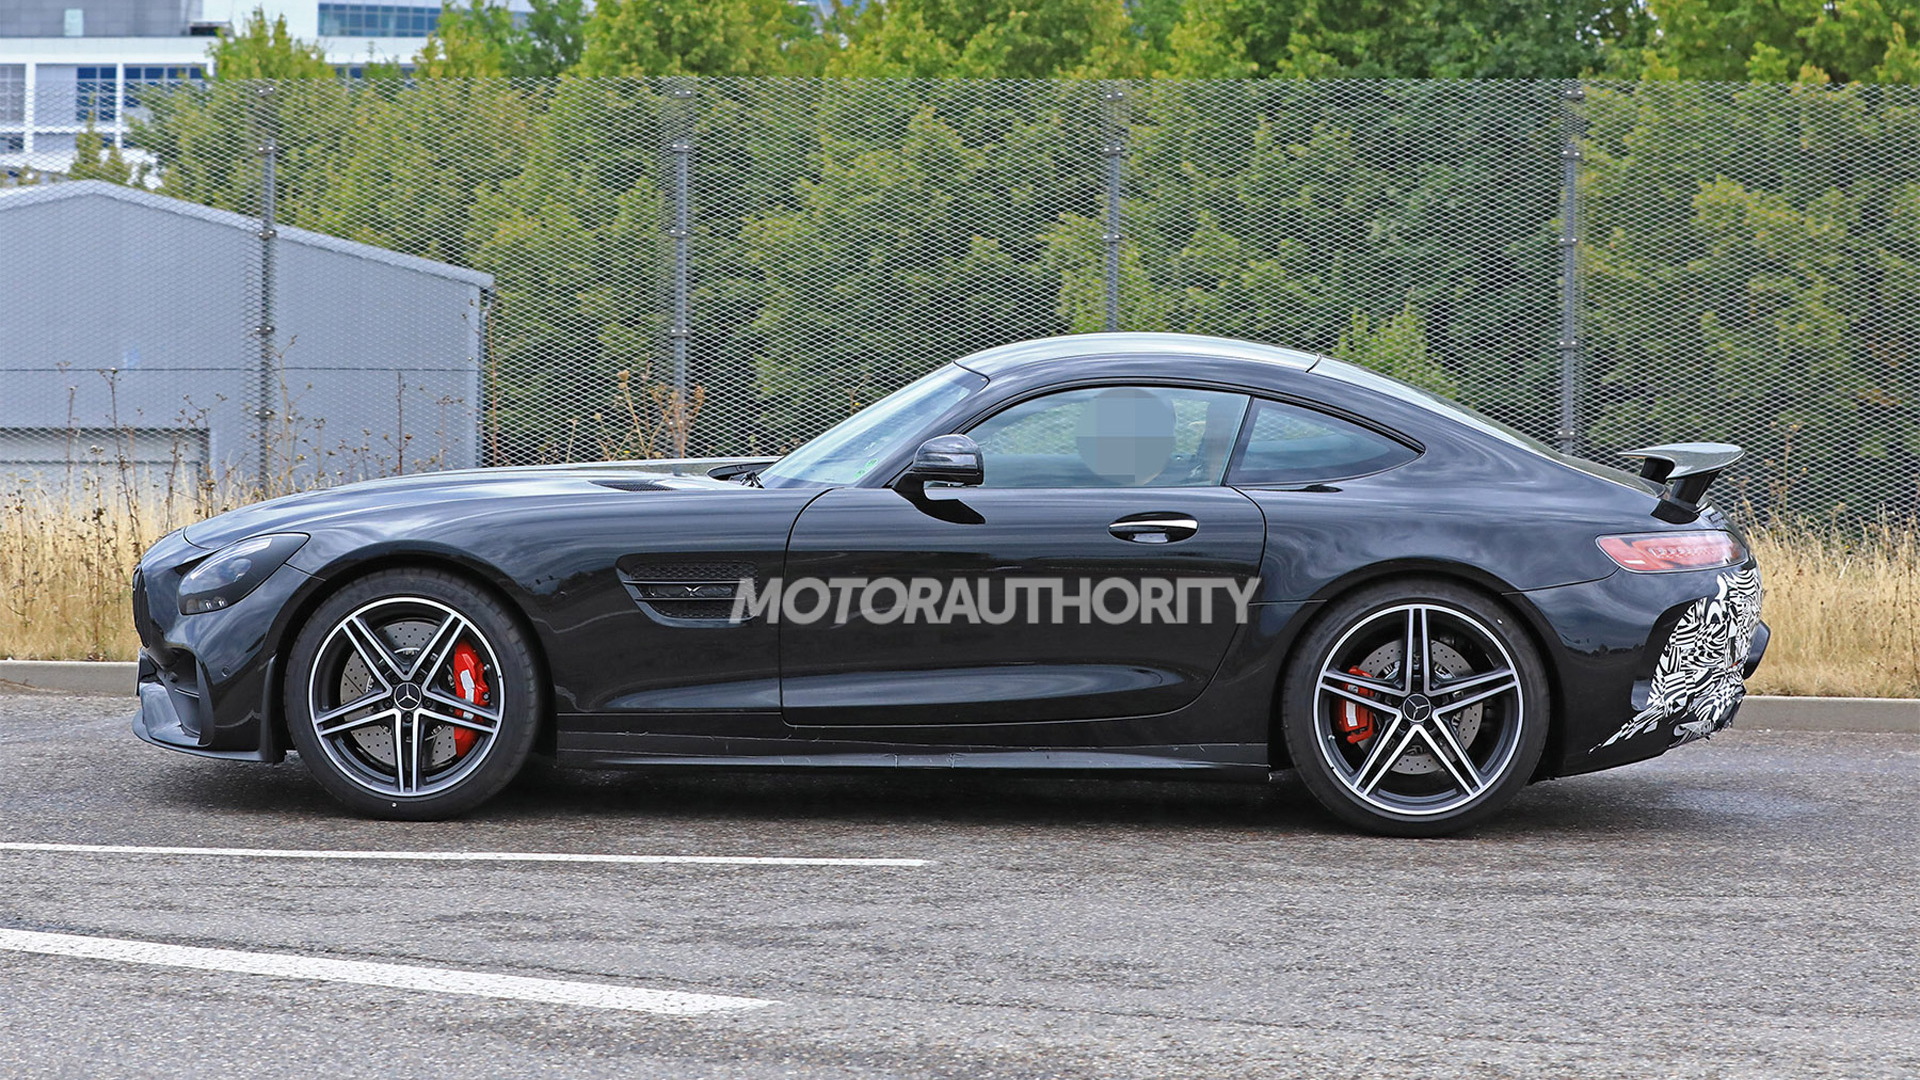 2020 MercedesAMG GT spy shots and video